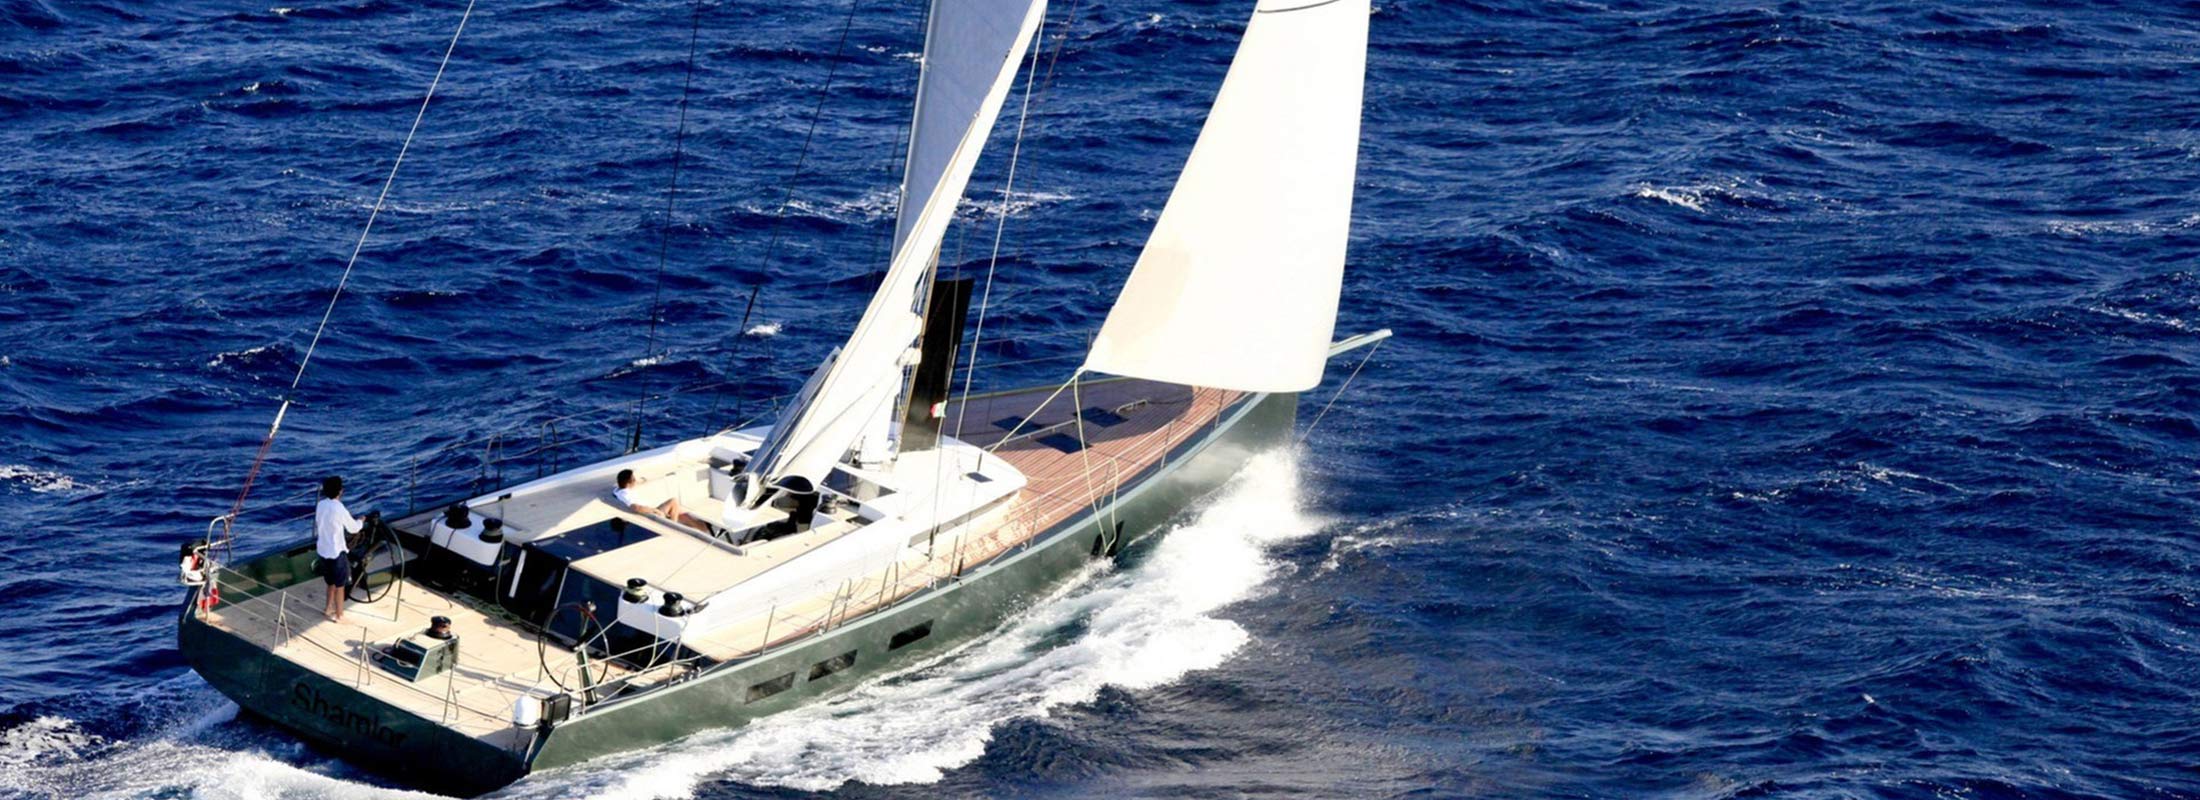 Shamlor Sailing Yacht for Charter Mediterranean slider 2